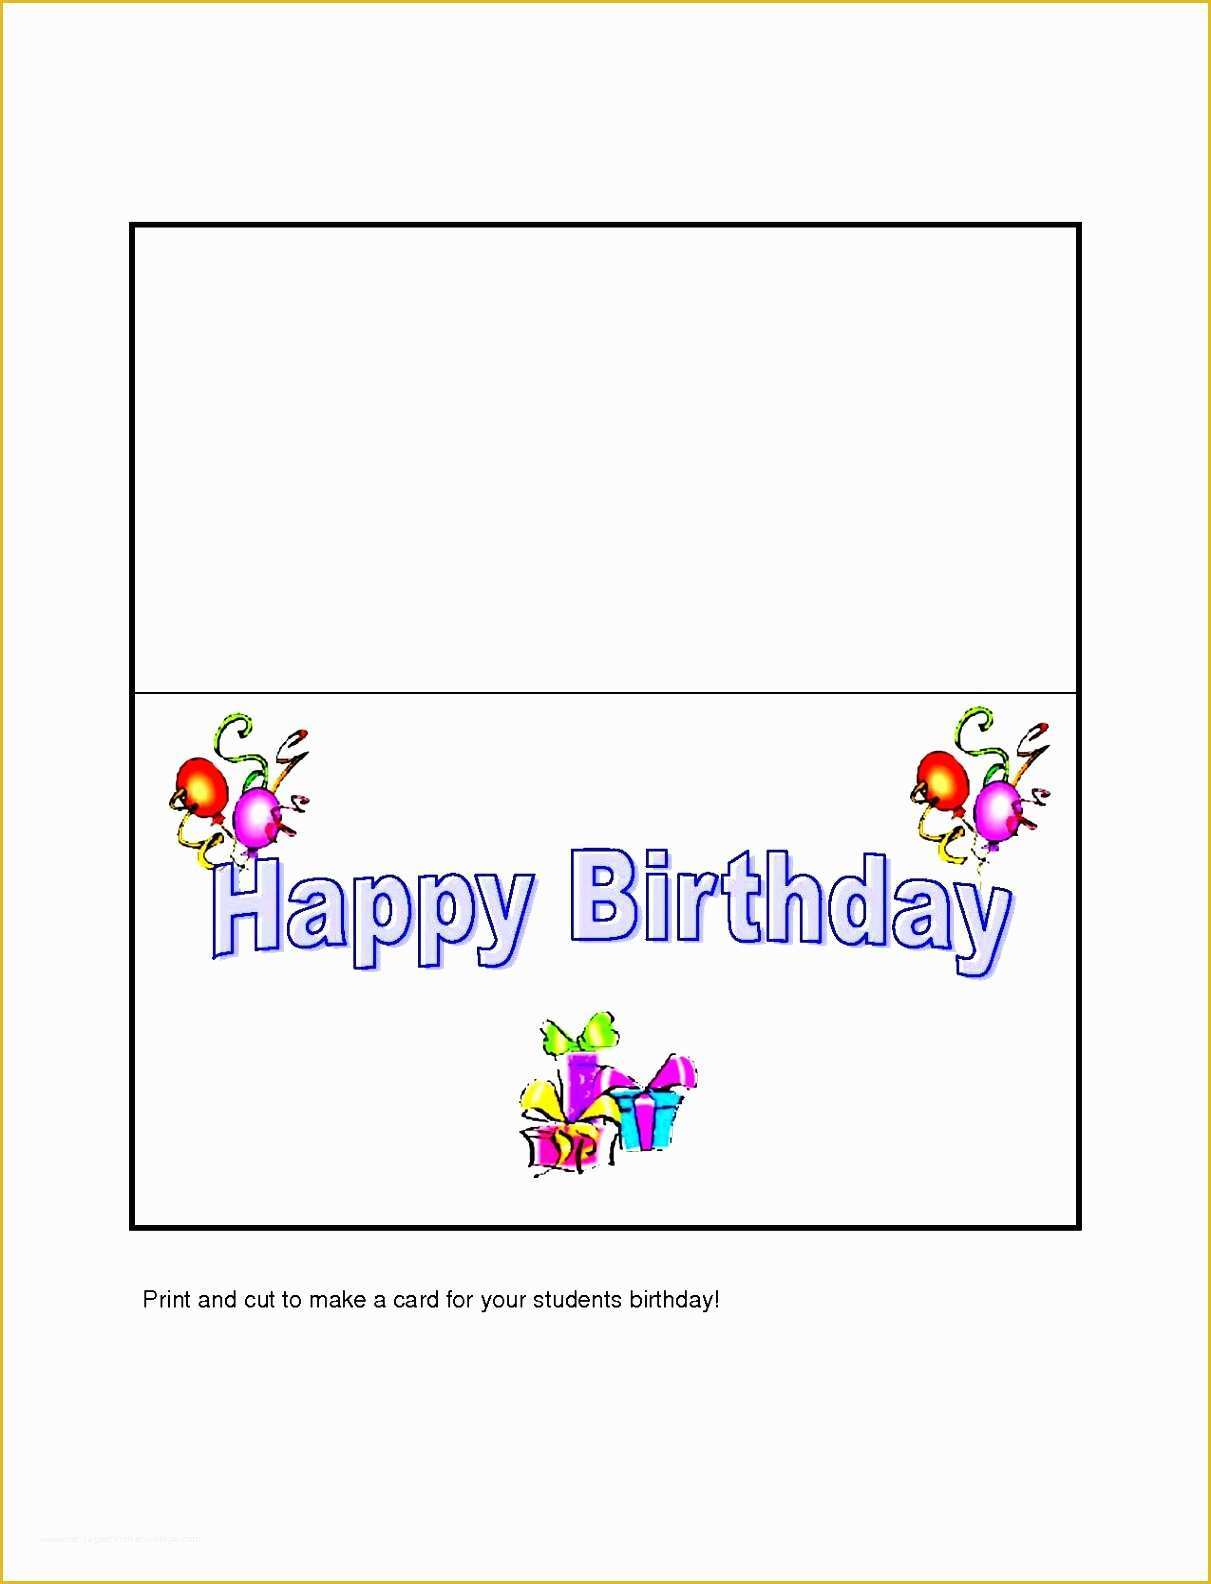 Free Greeting Card Templates Of 10 Free Microsoft Word Greeting Card Templates